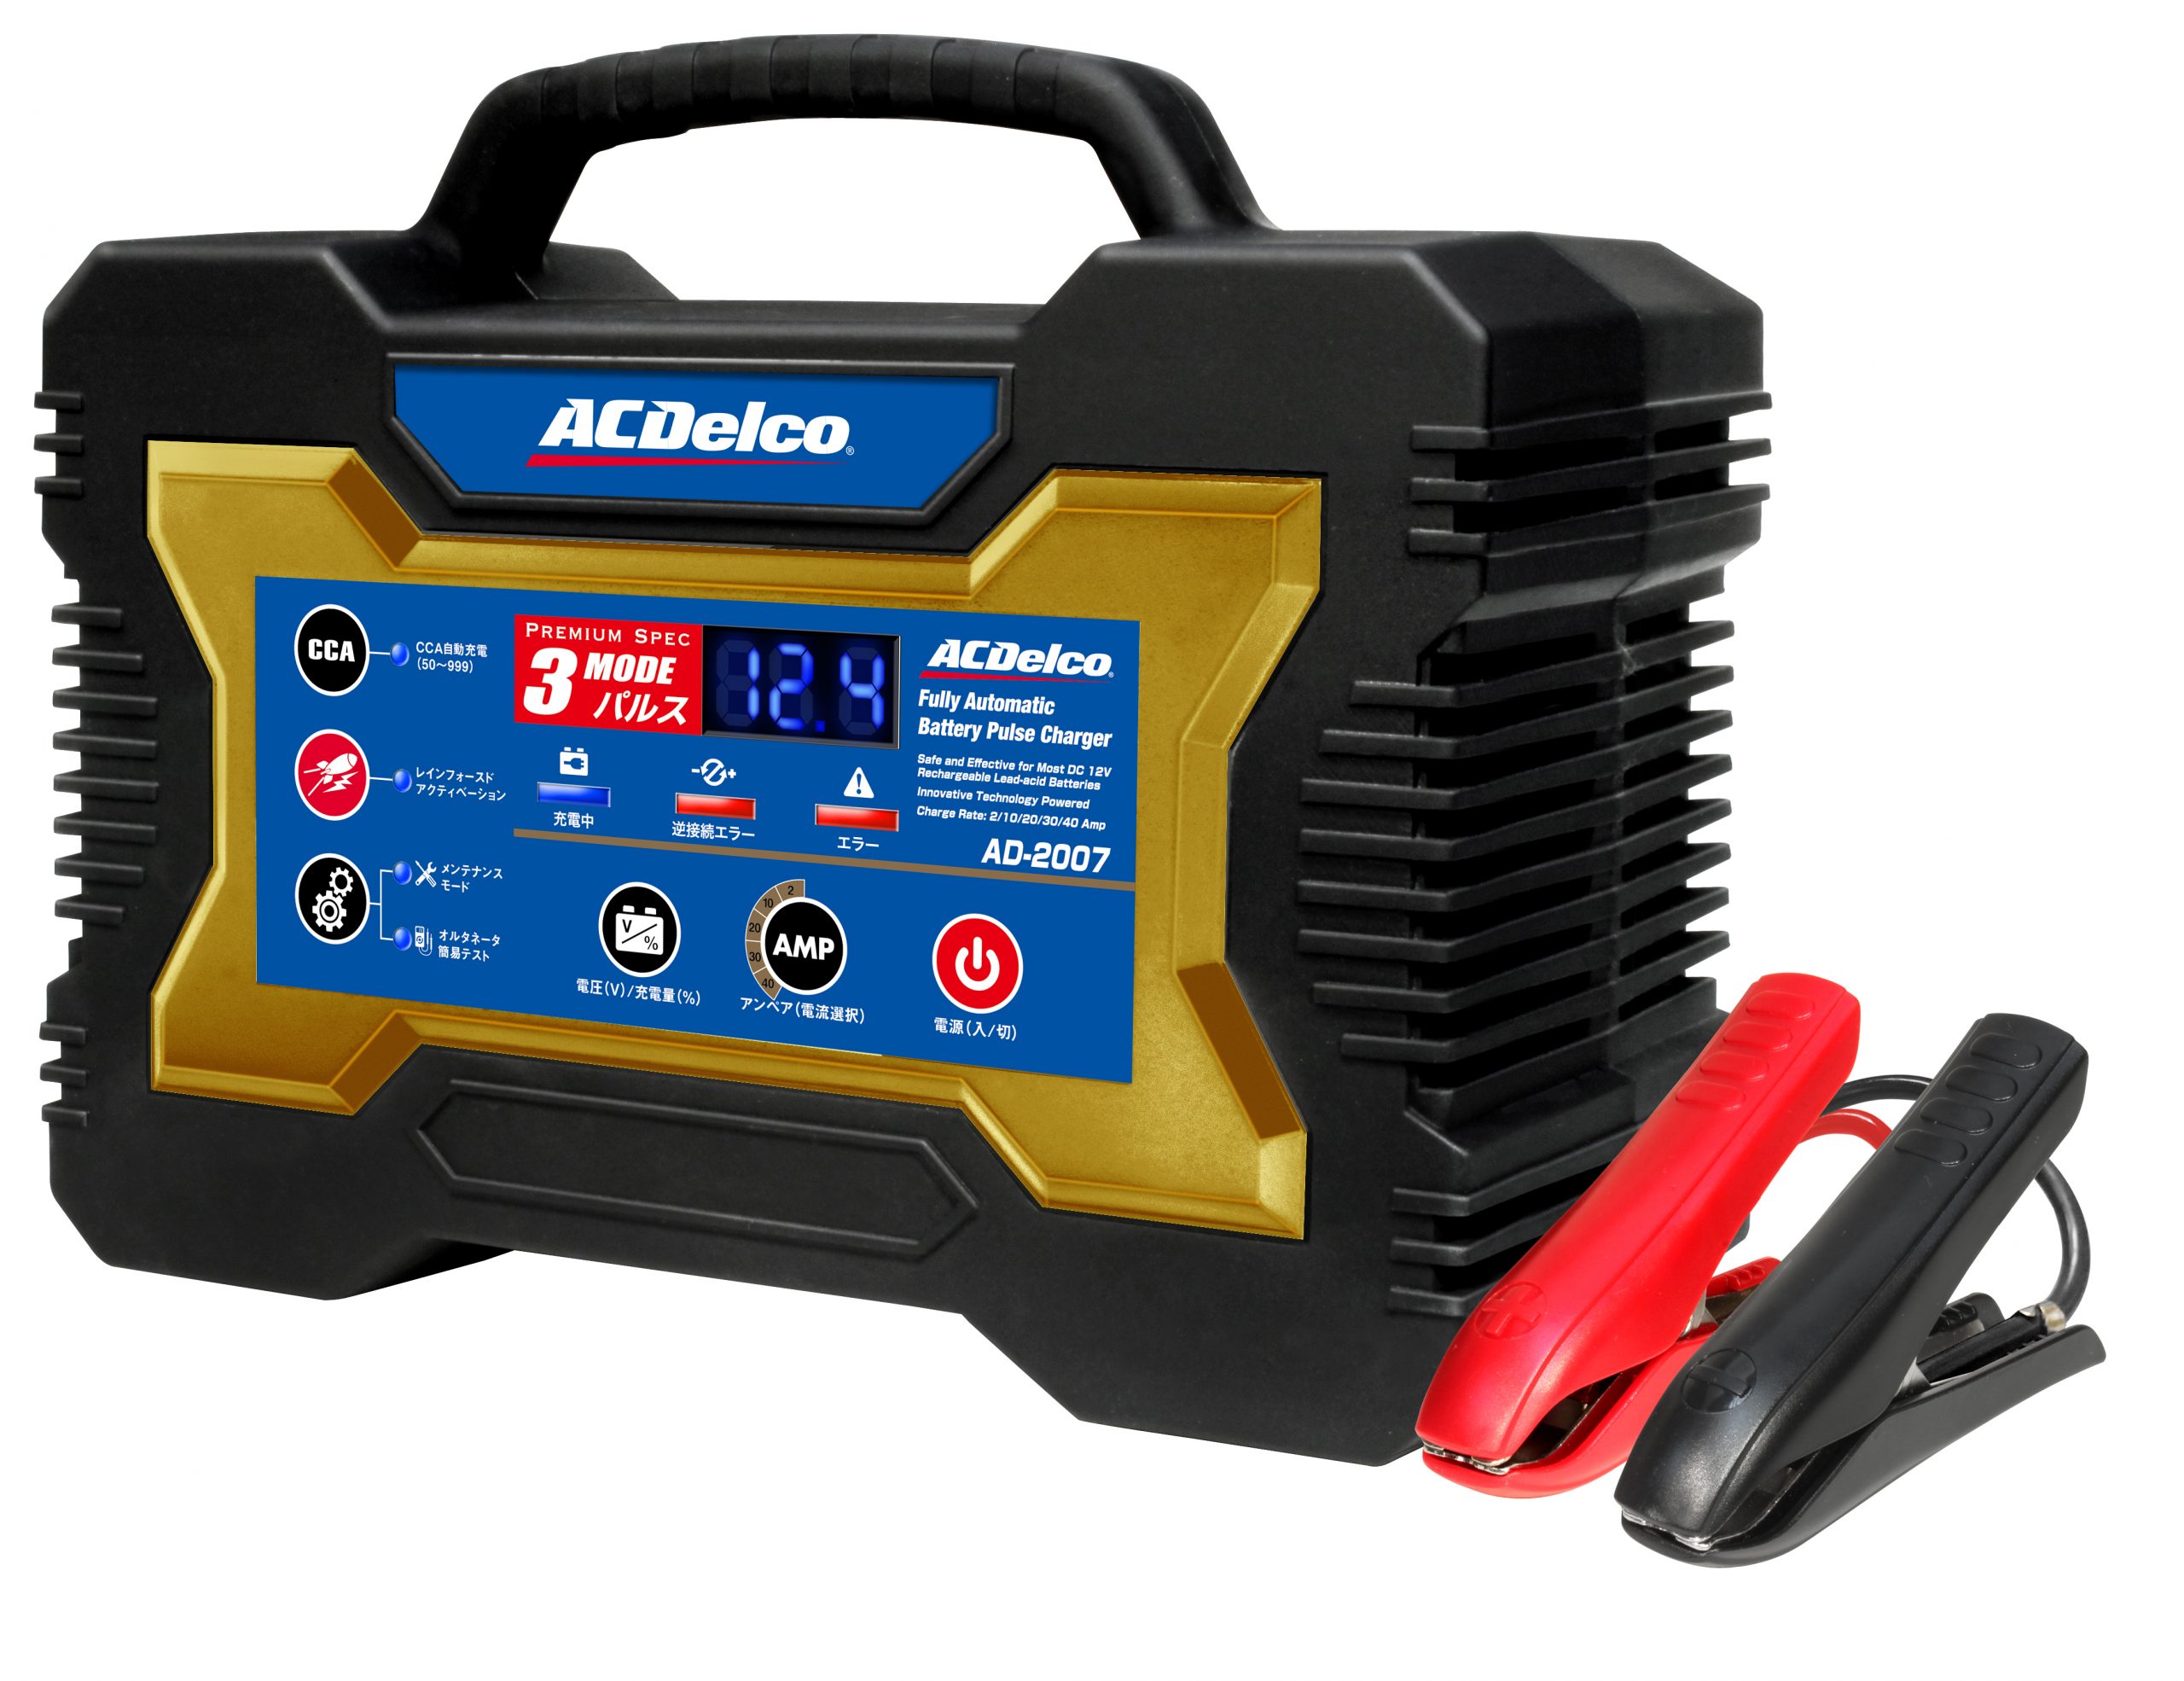 ACDelco】新製品AD-2007充電器 販売開始！|本国アメ車業界の流れが